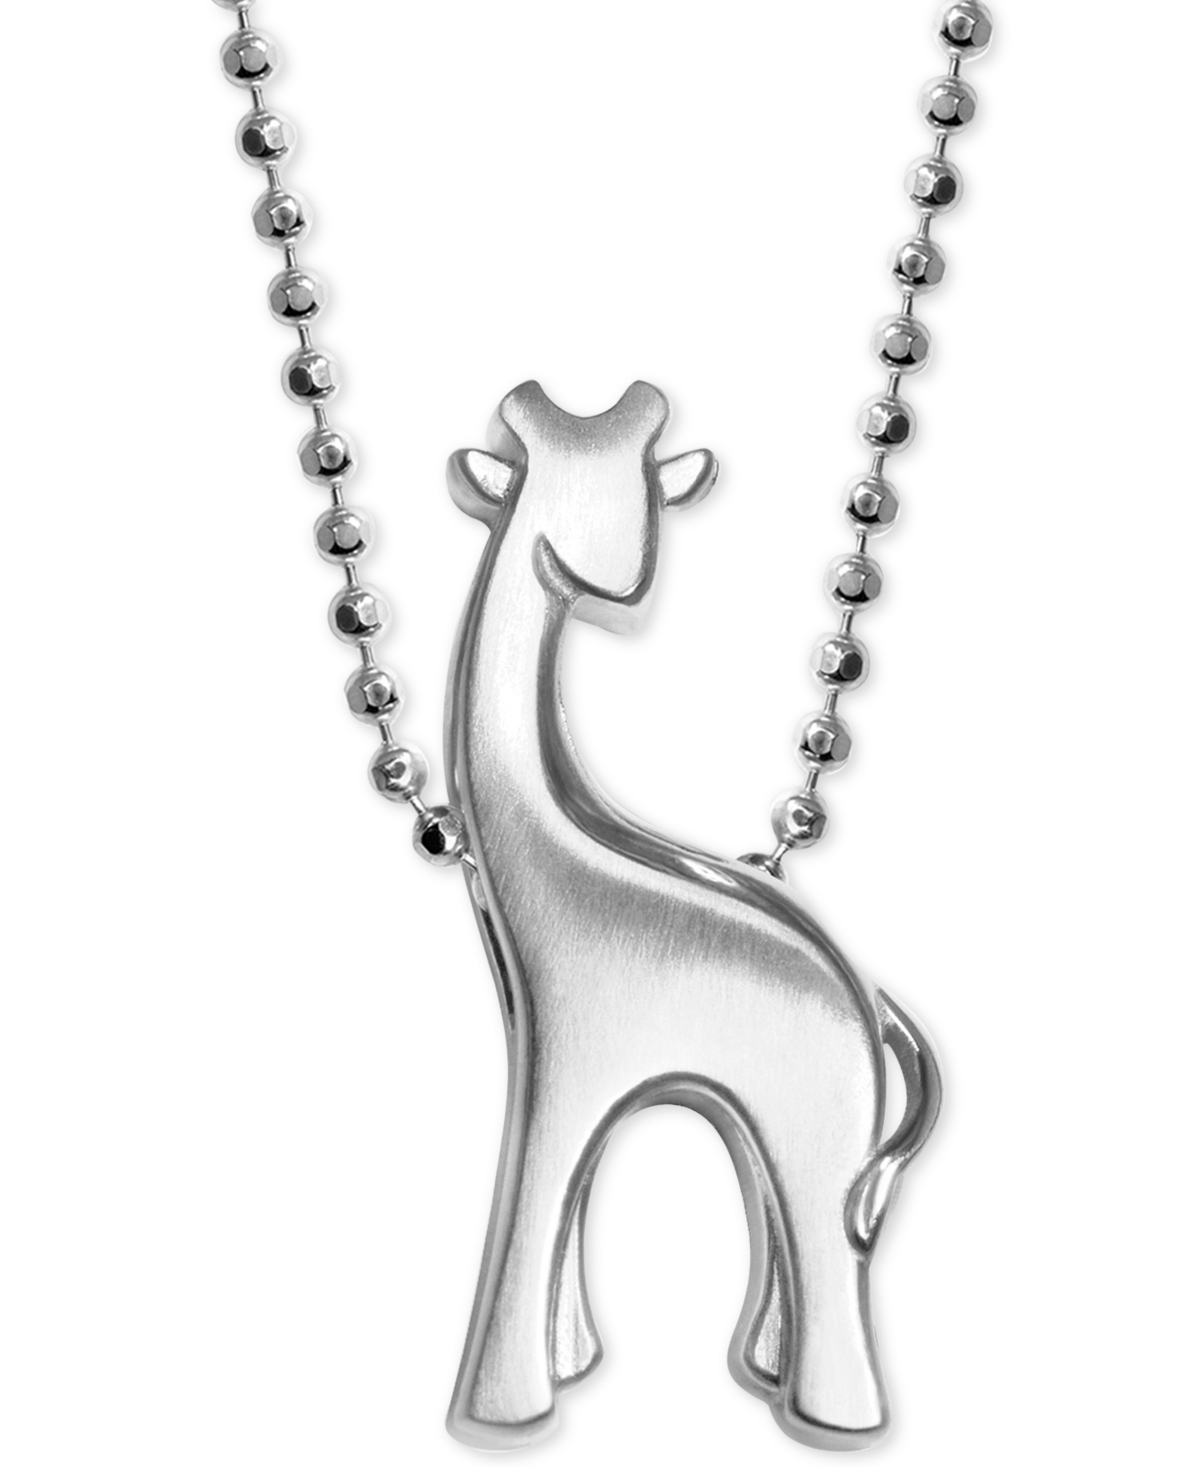 Giraffe Pendant Necklace in Sterling Silver - Sterling Silver